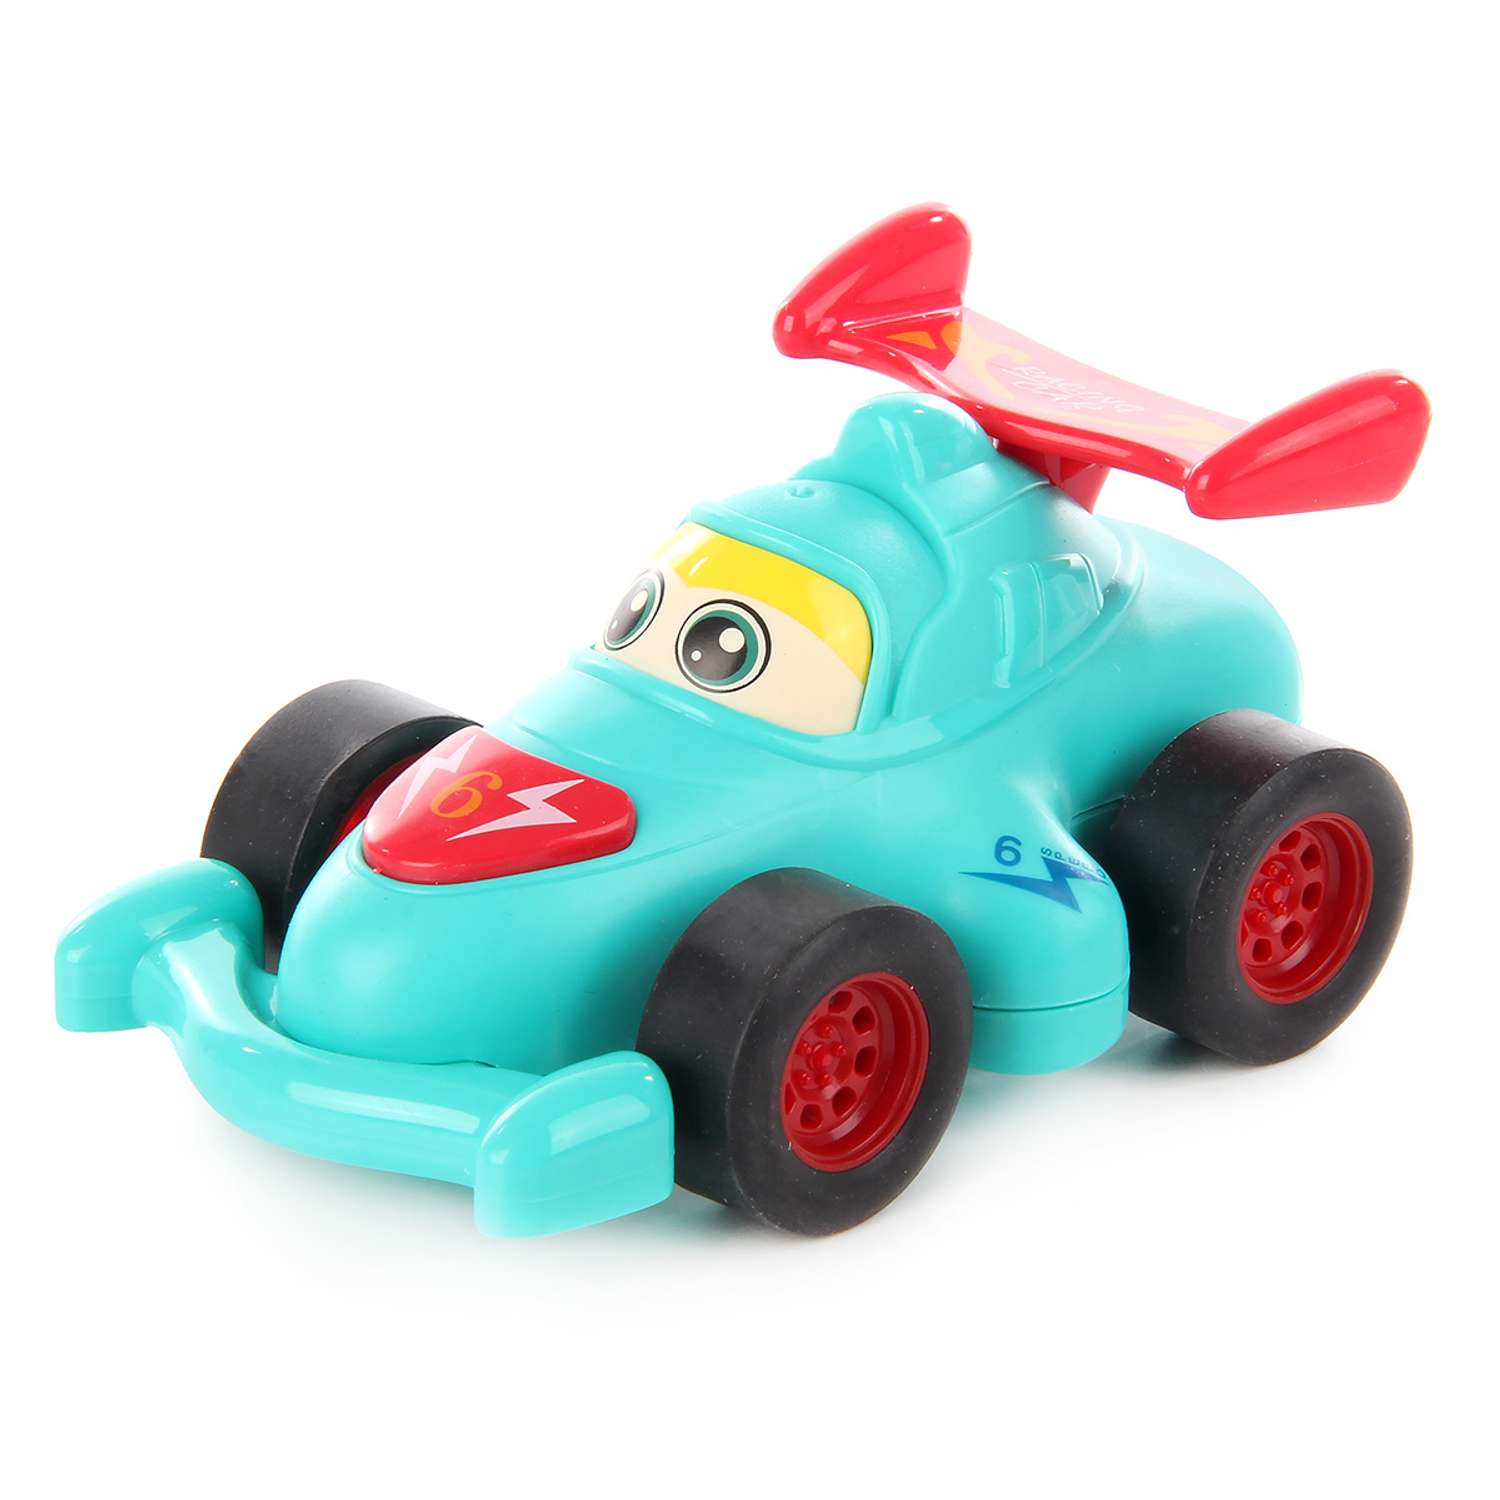 Развивающая игрушка Ути Пути гоночная машинка - фото 1